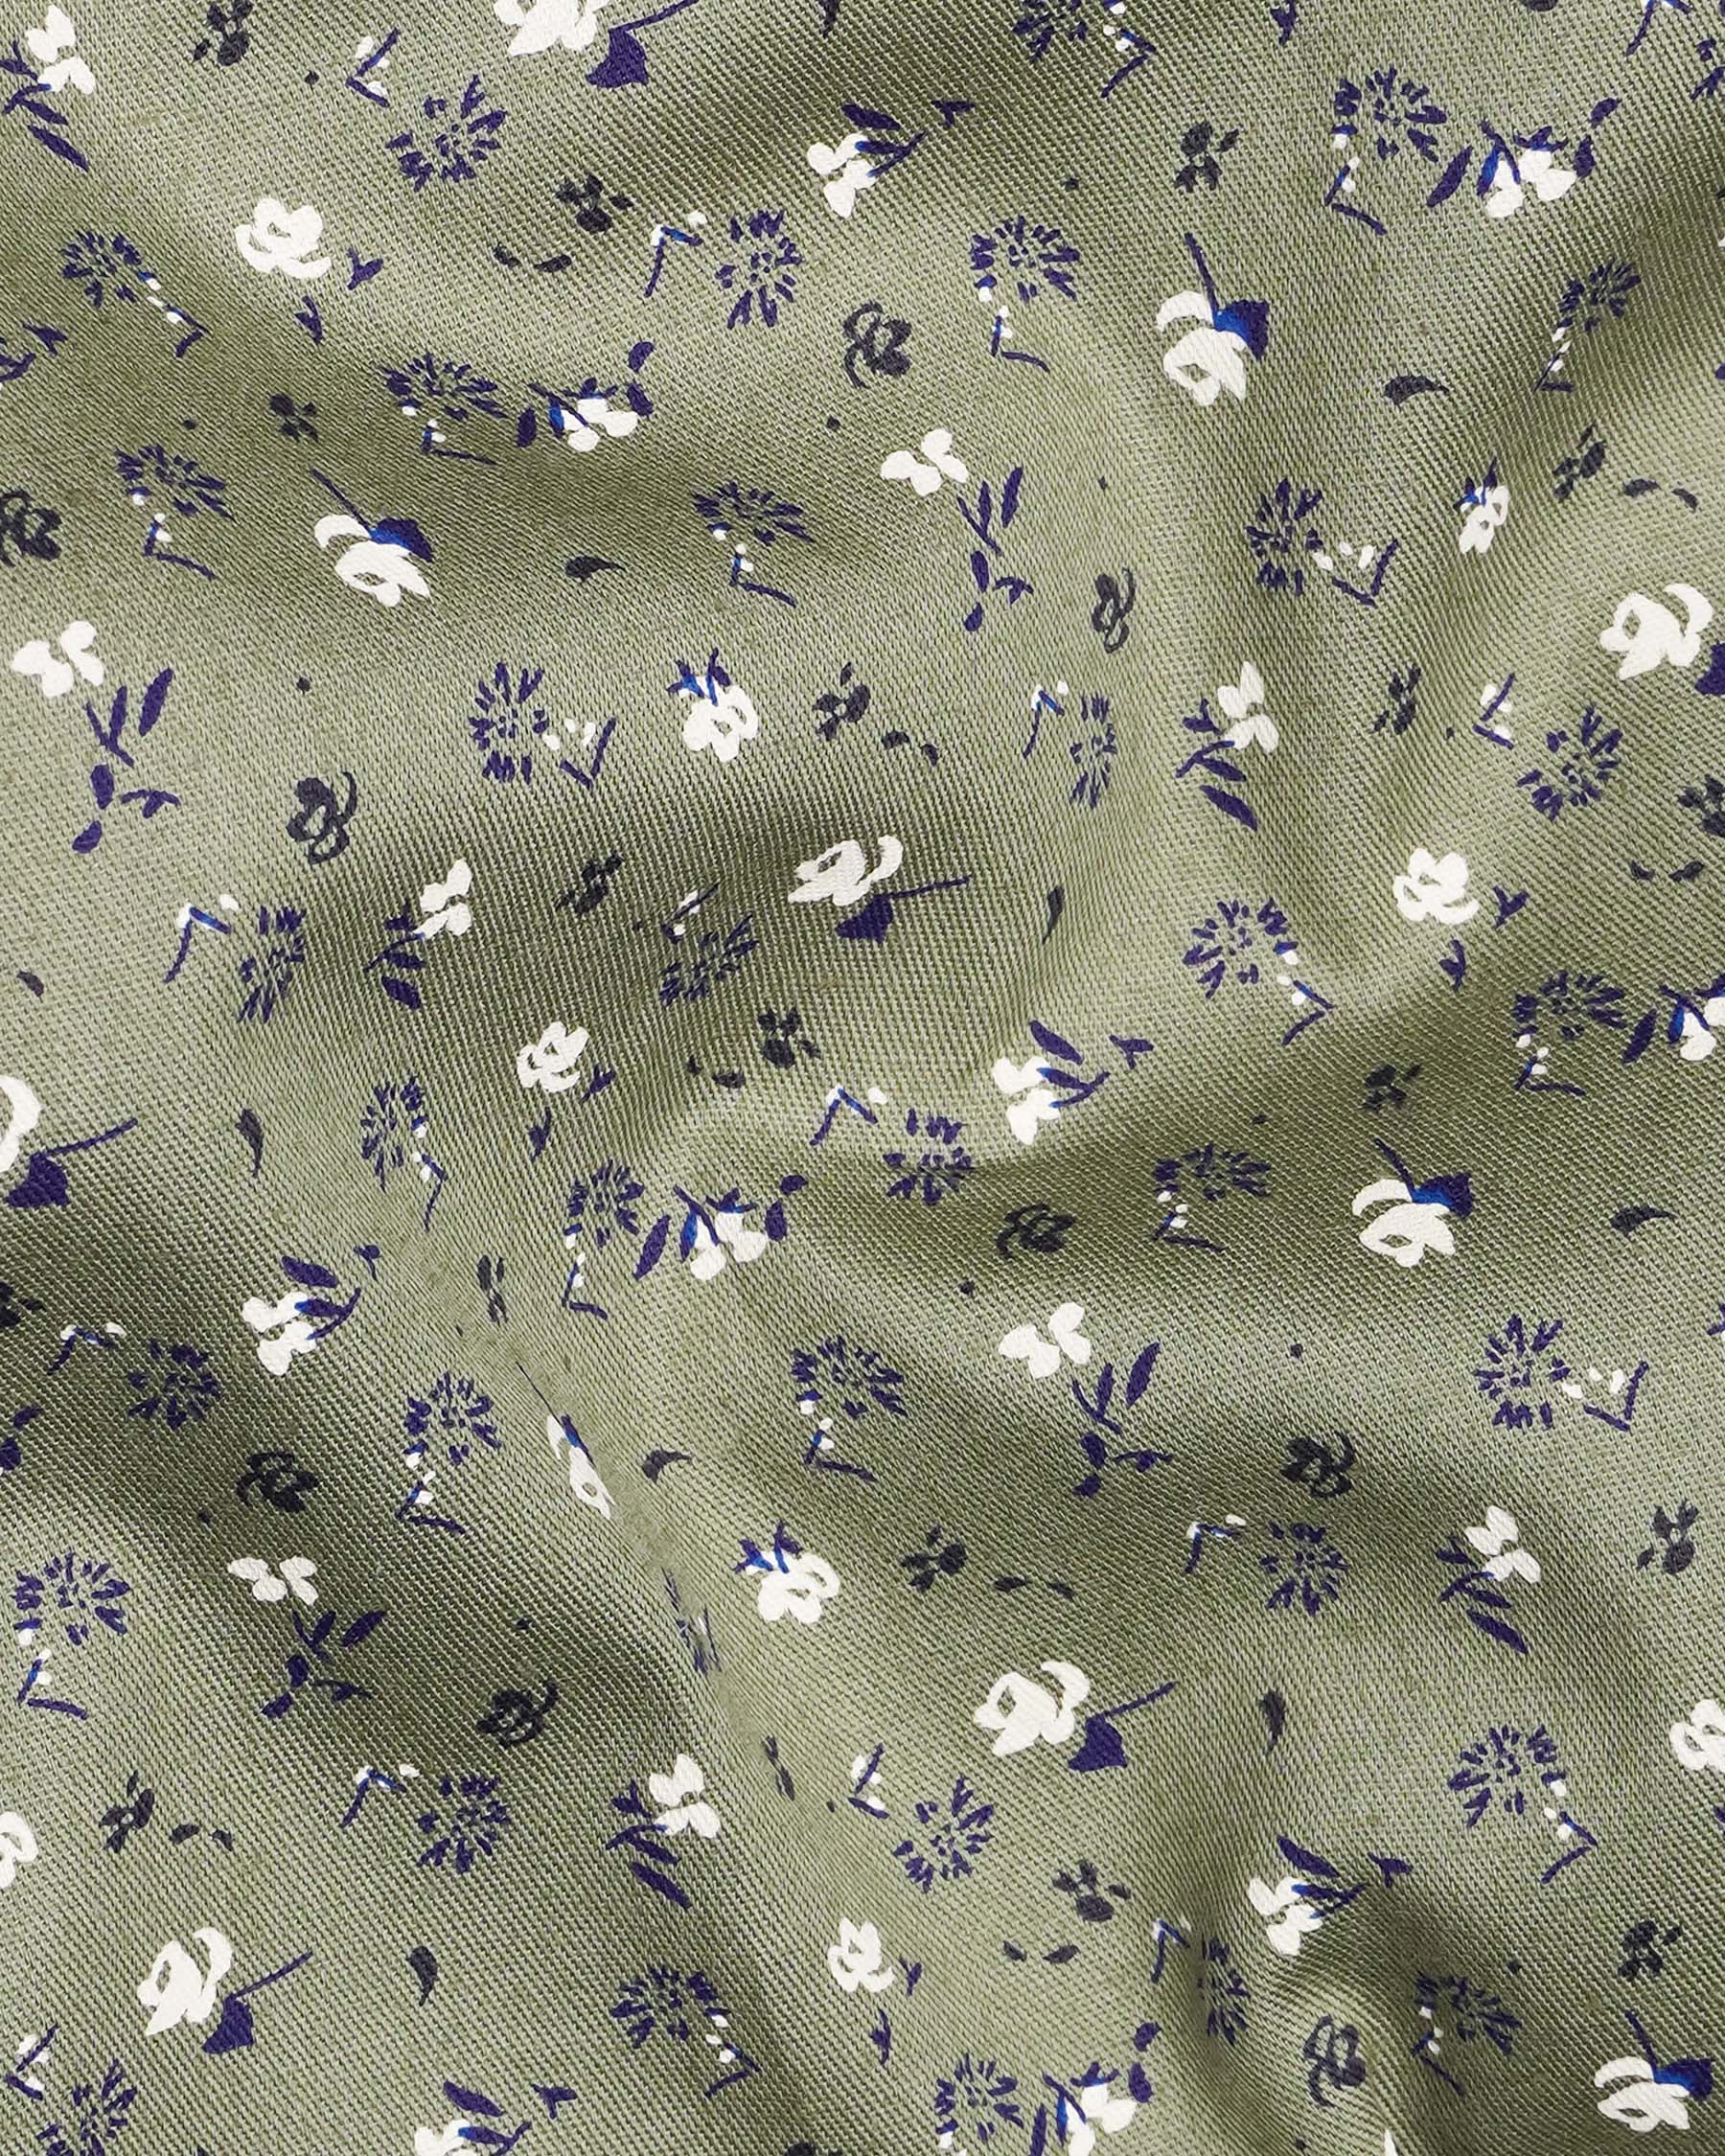 Sage Green Floral Printed Super Soft Premium Cotton Shirt 7183-CA-BLE-38,7183-CA-BLE-H-38,7183-CA-BLE-39,7183-CA-BLE-H-39,7183-CA-BLE-40,7183-CA-BLE-H-40,7183-CA-BLE-42,7183-CA-BLE-H-42,7183-CA-BLE-44,7183-CA-BLE-H-44,7183-CA-BLE-46,7183-CA-BLE-H-46,7183-CA-BLE-48,7183-CA-BLE-H-48,7183-CA-BLE-50,7183-CA-BLE-H-50,7183-CA-BLE-52,7183-CA-BLE-H-52